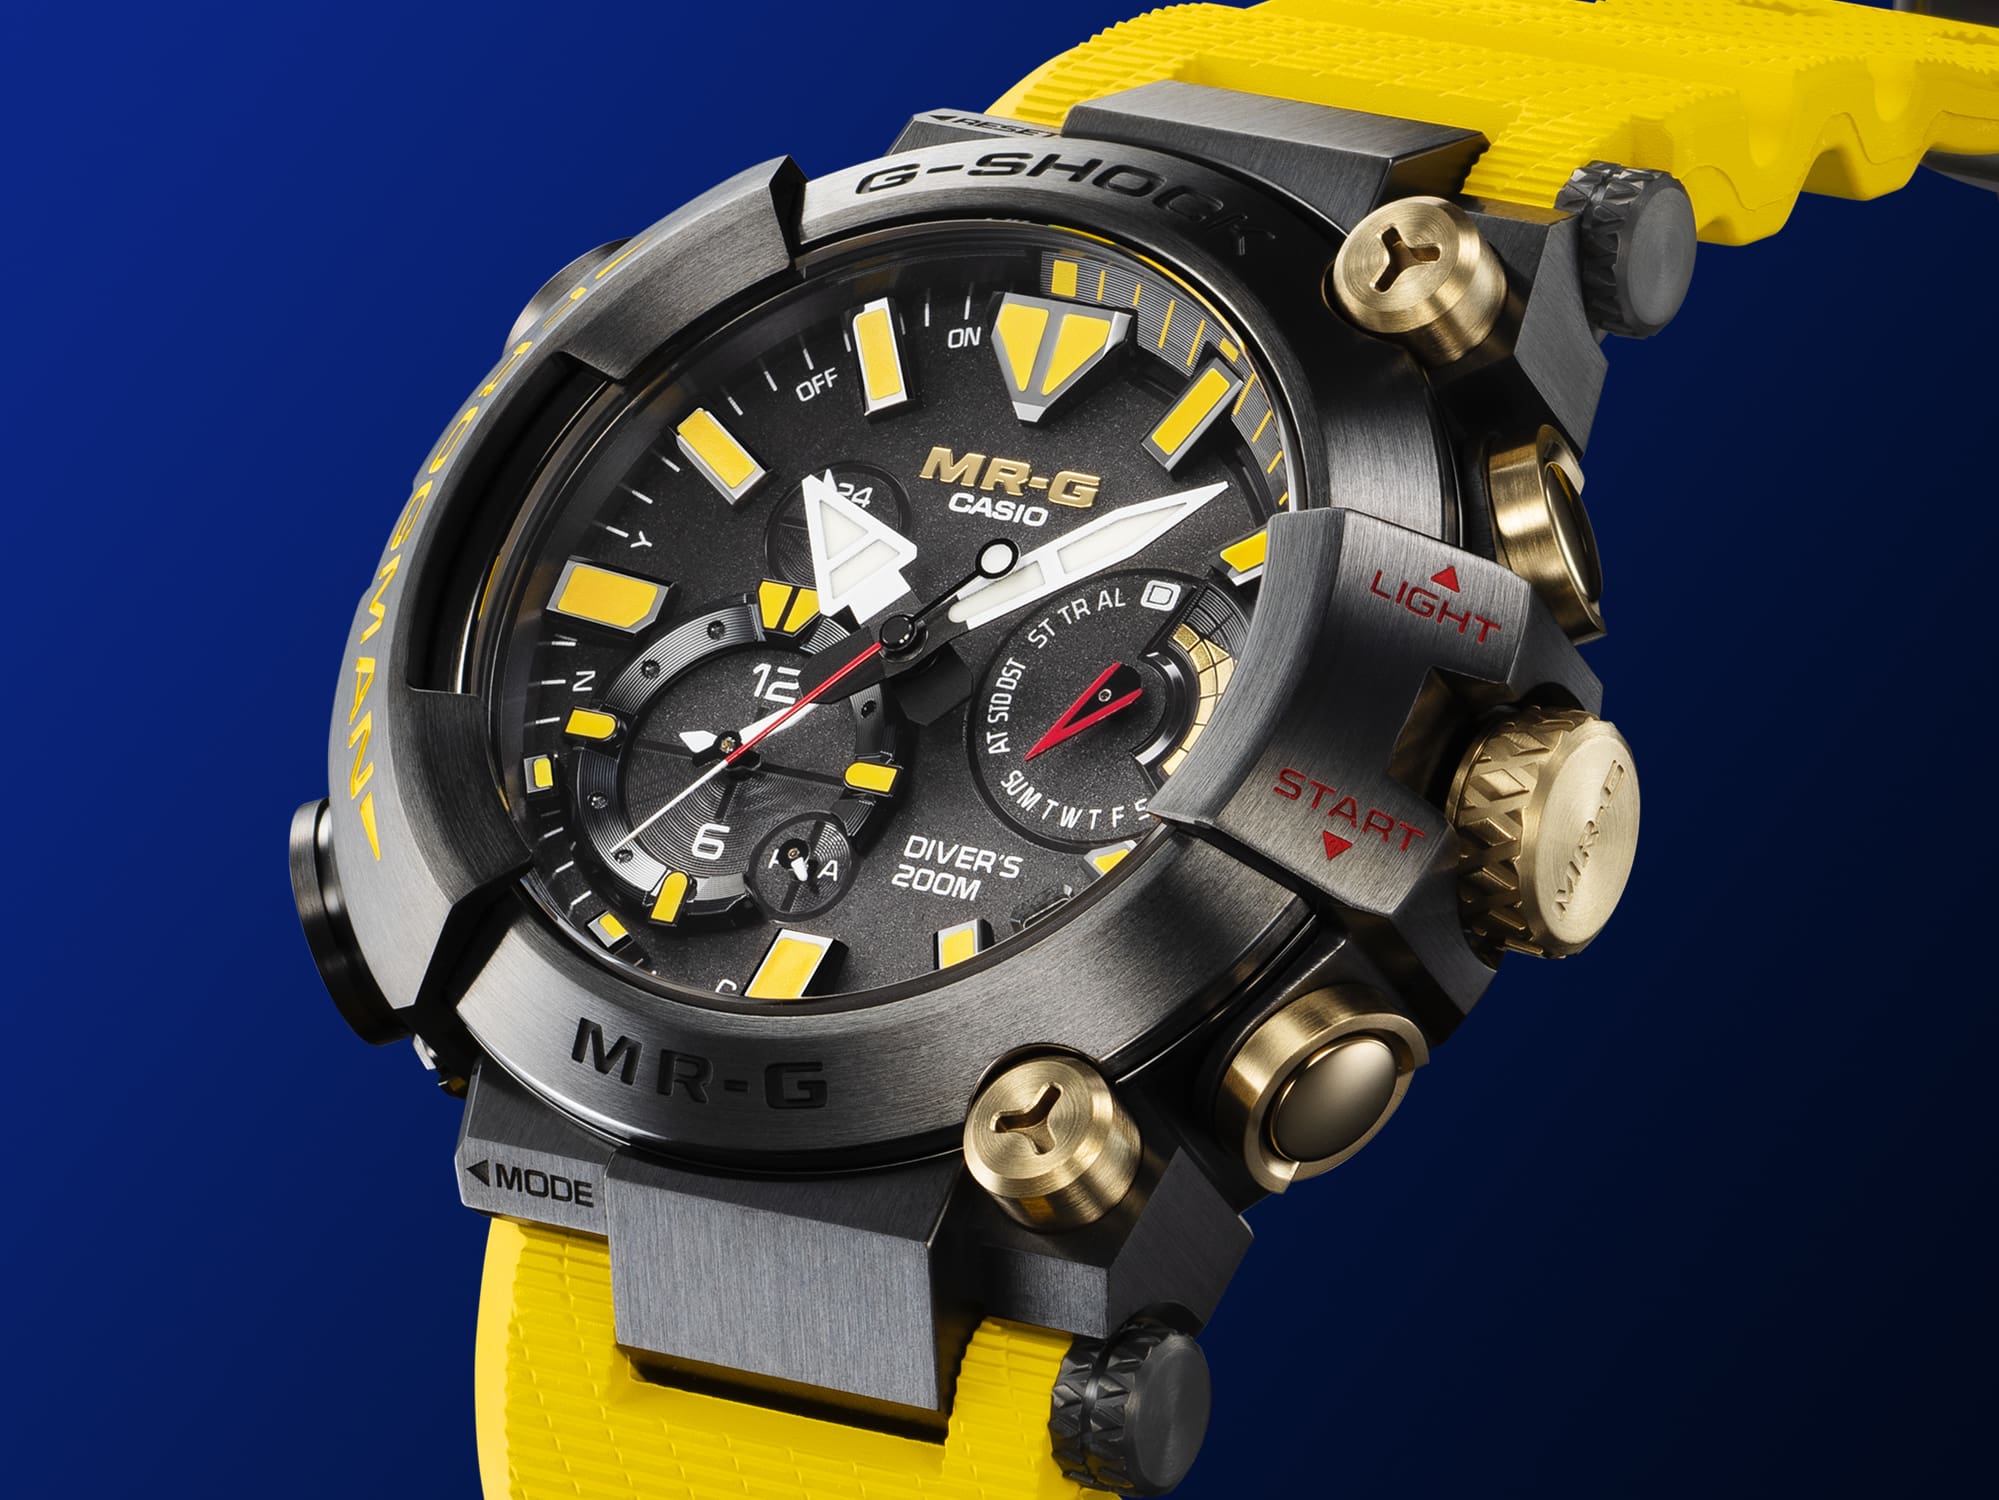 G-SHOCK mrgbf1000e-1a9 analog watch with yellow band